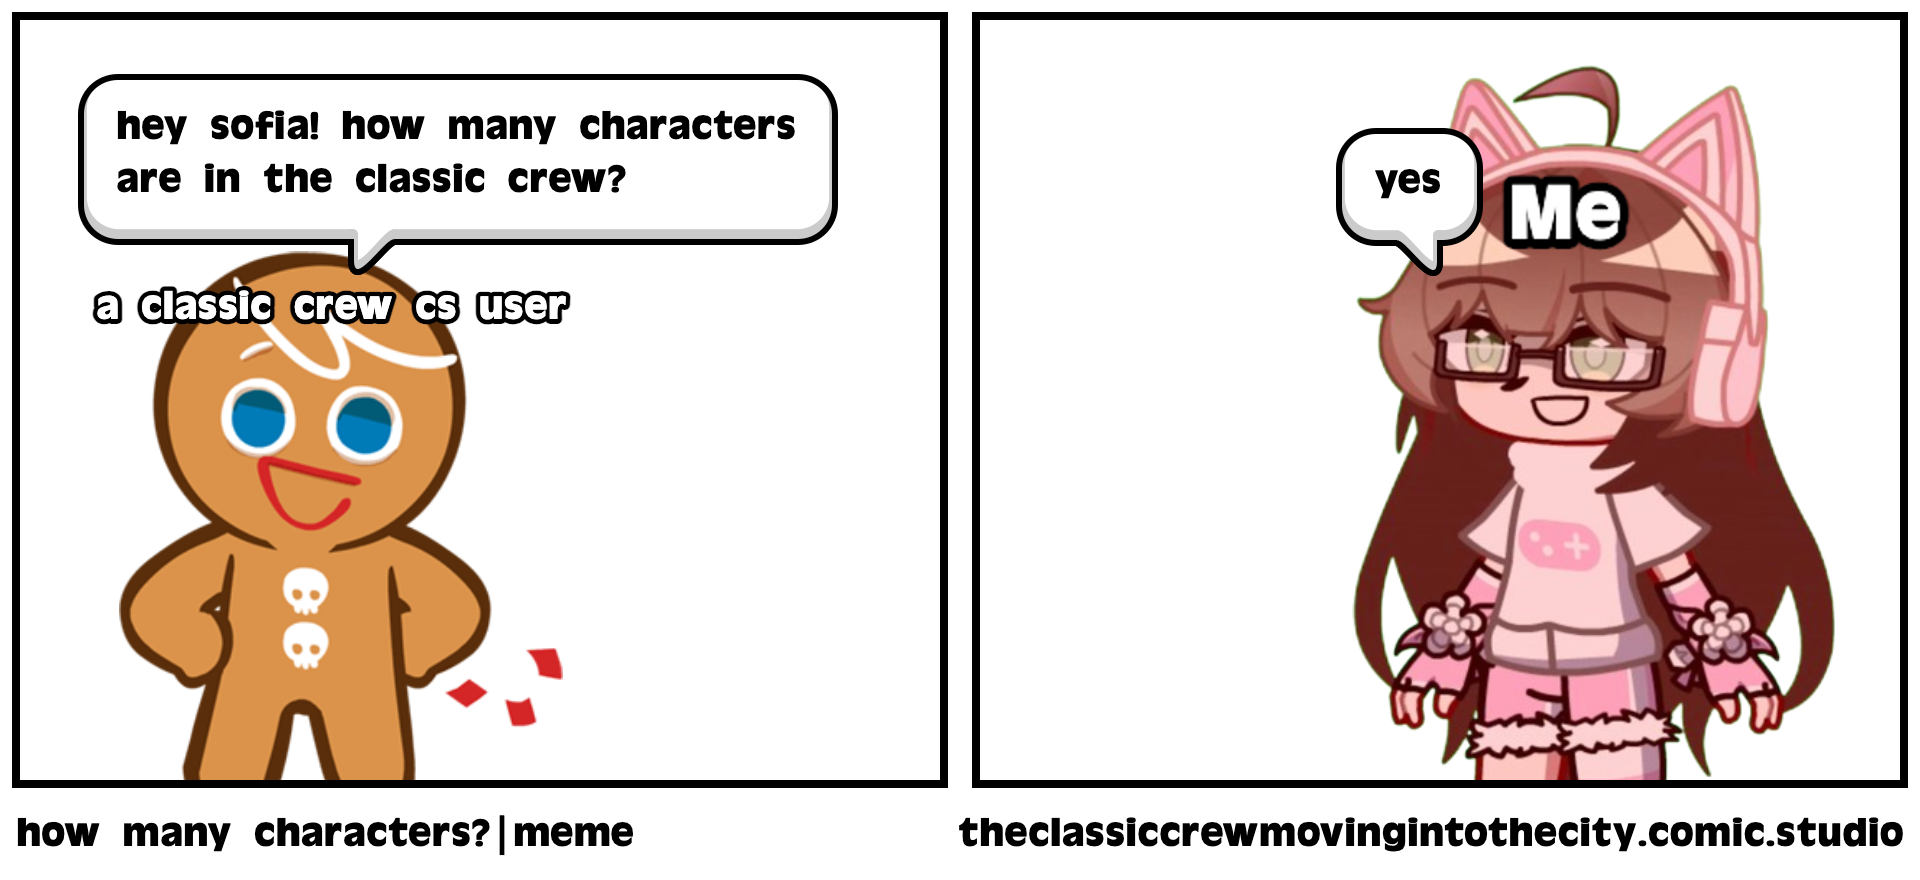 how many characters?|meme